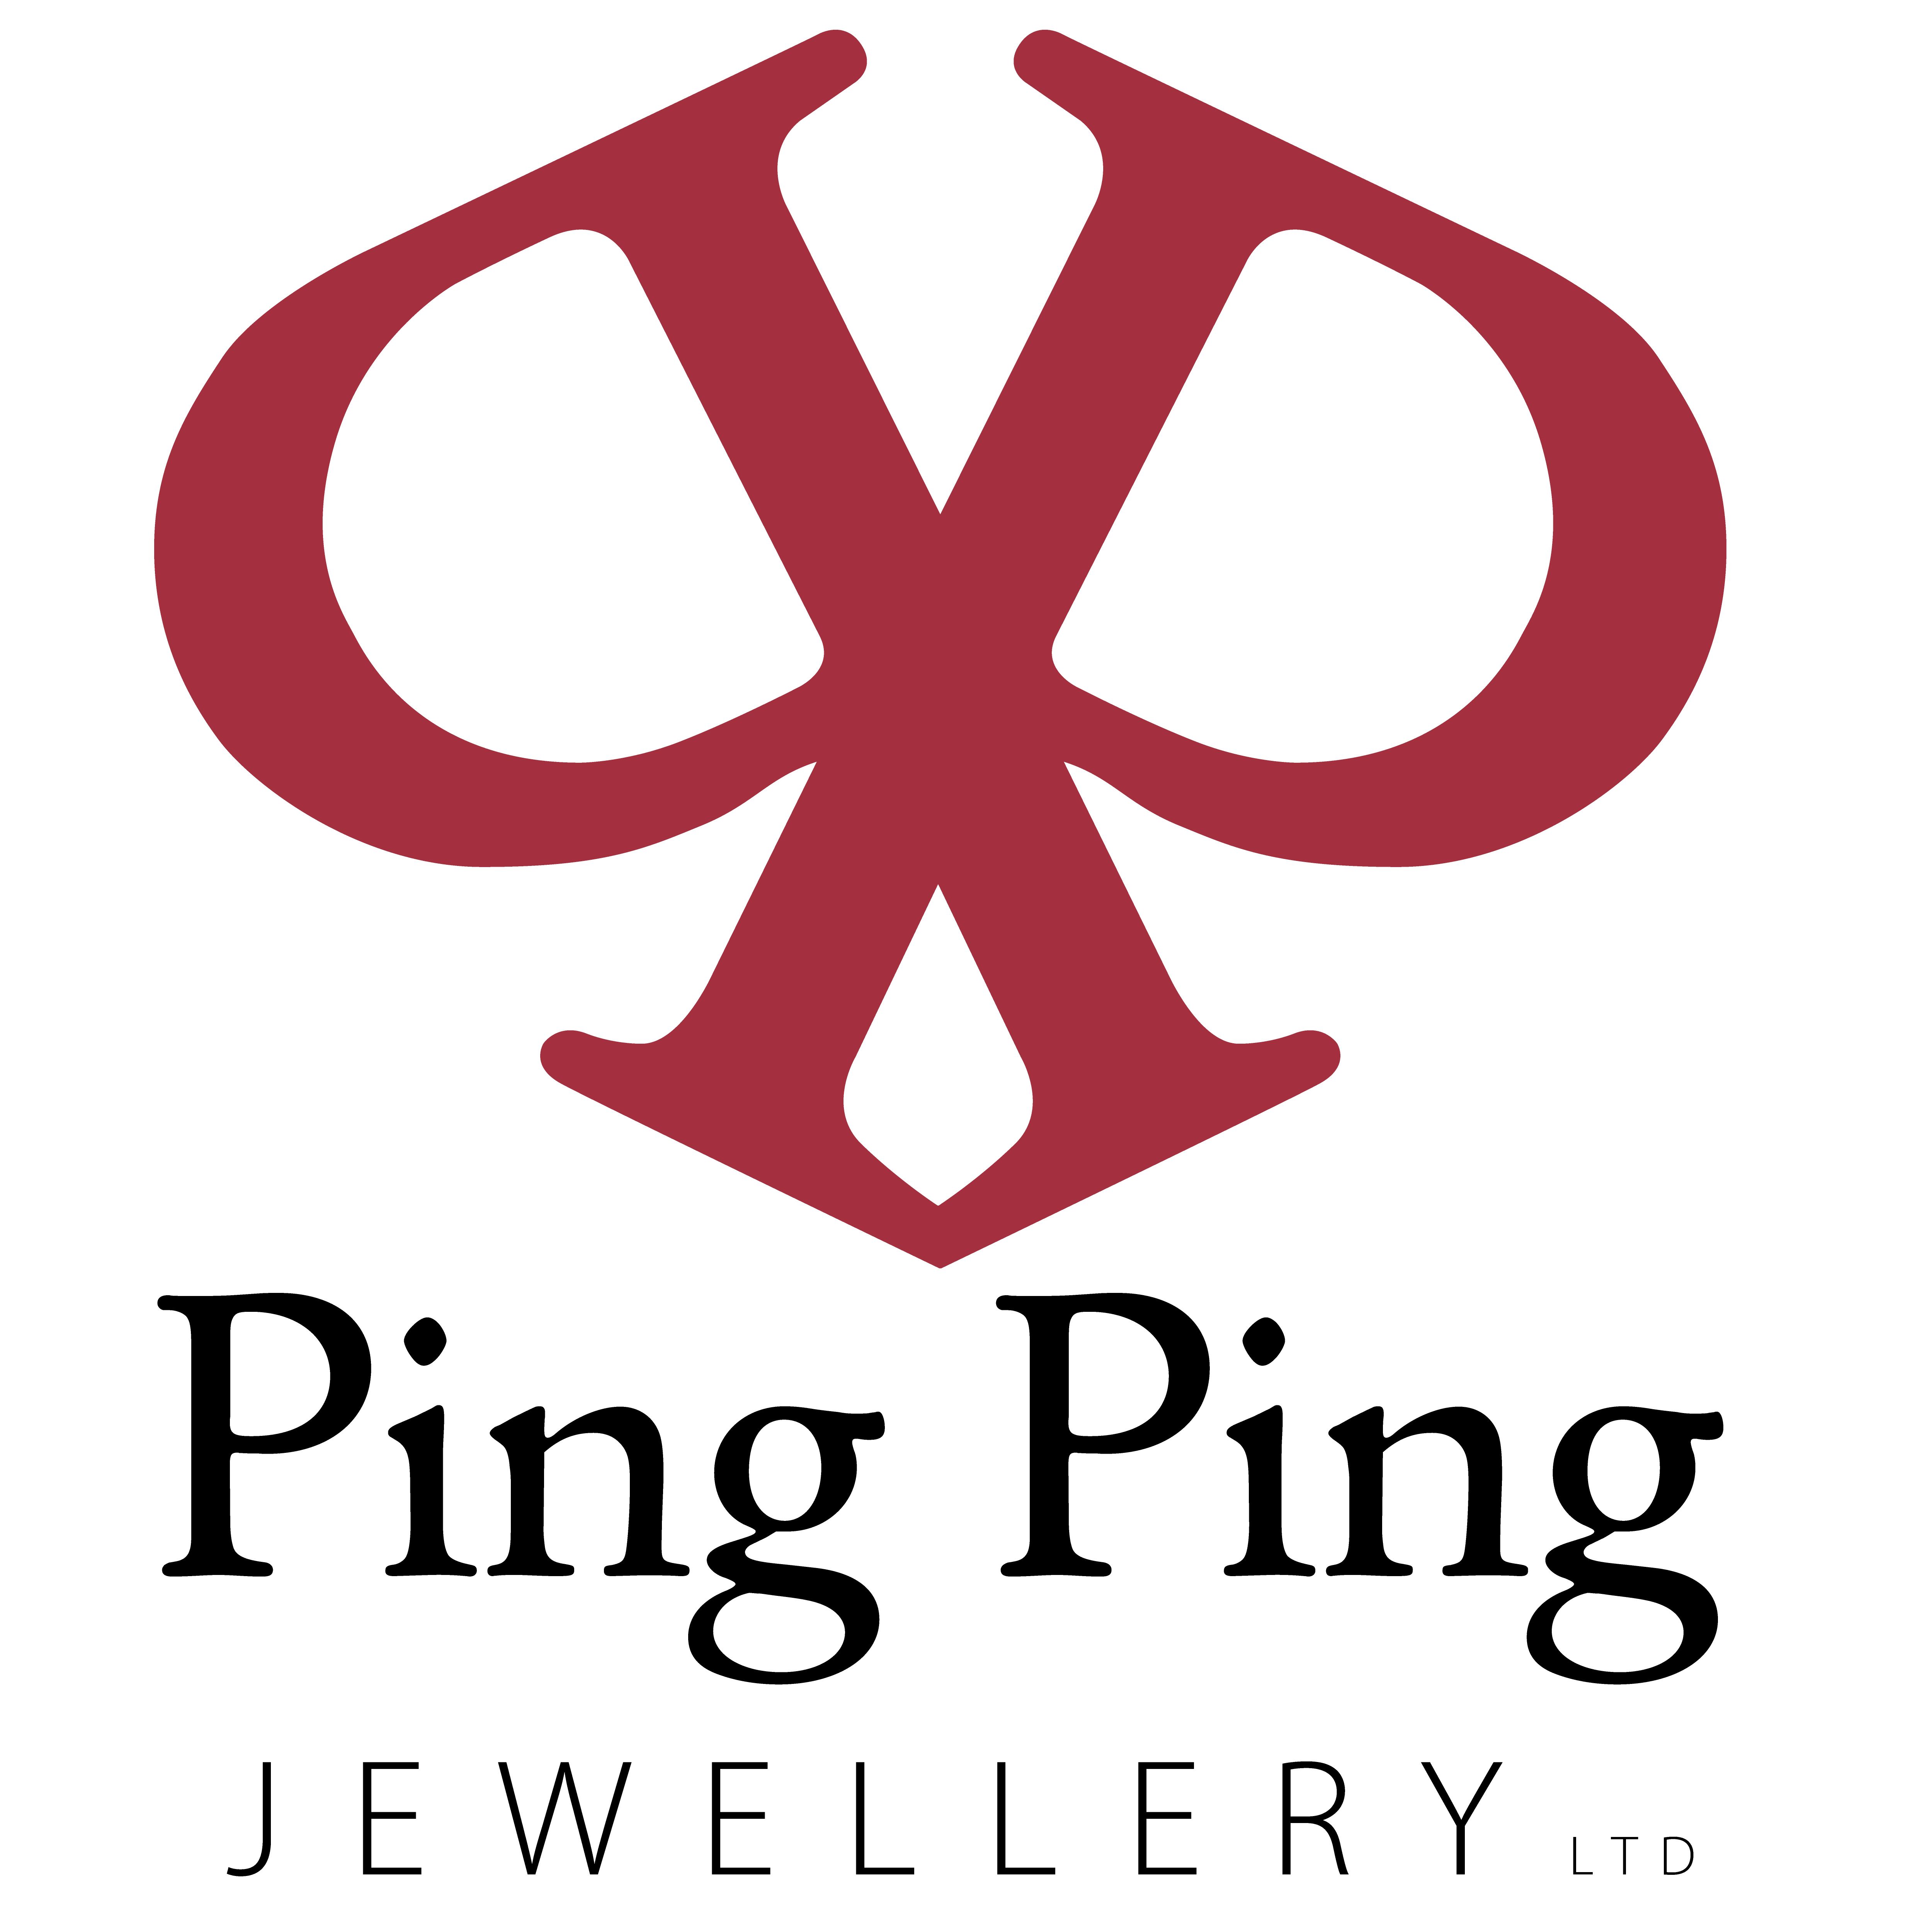 Ping Ping Jewellery Ltd